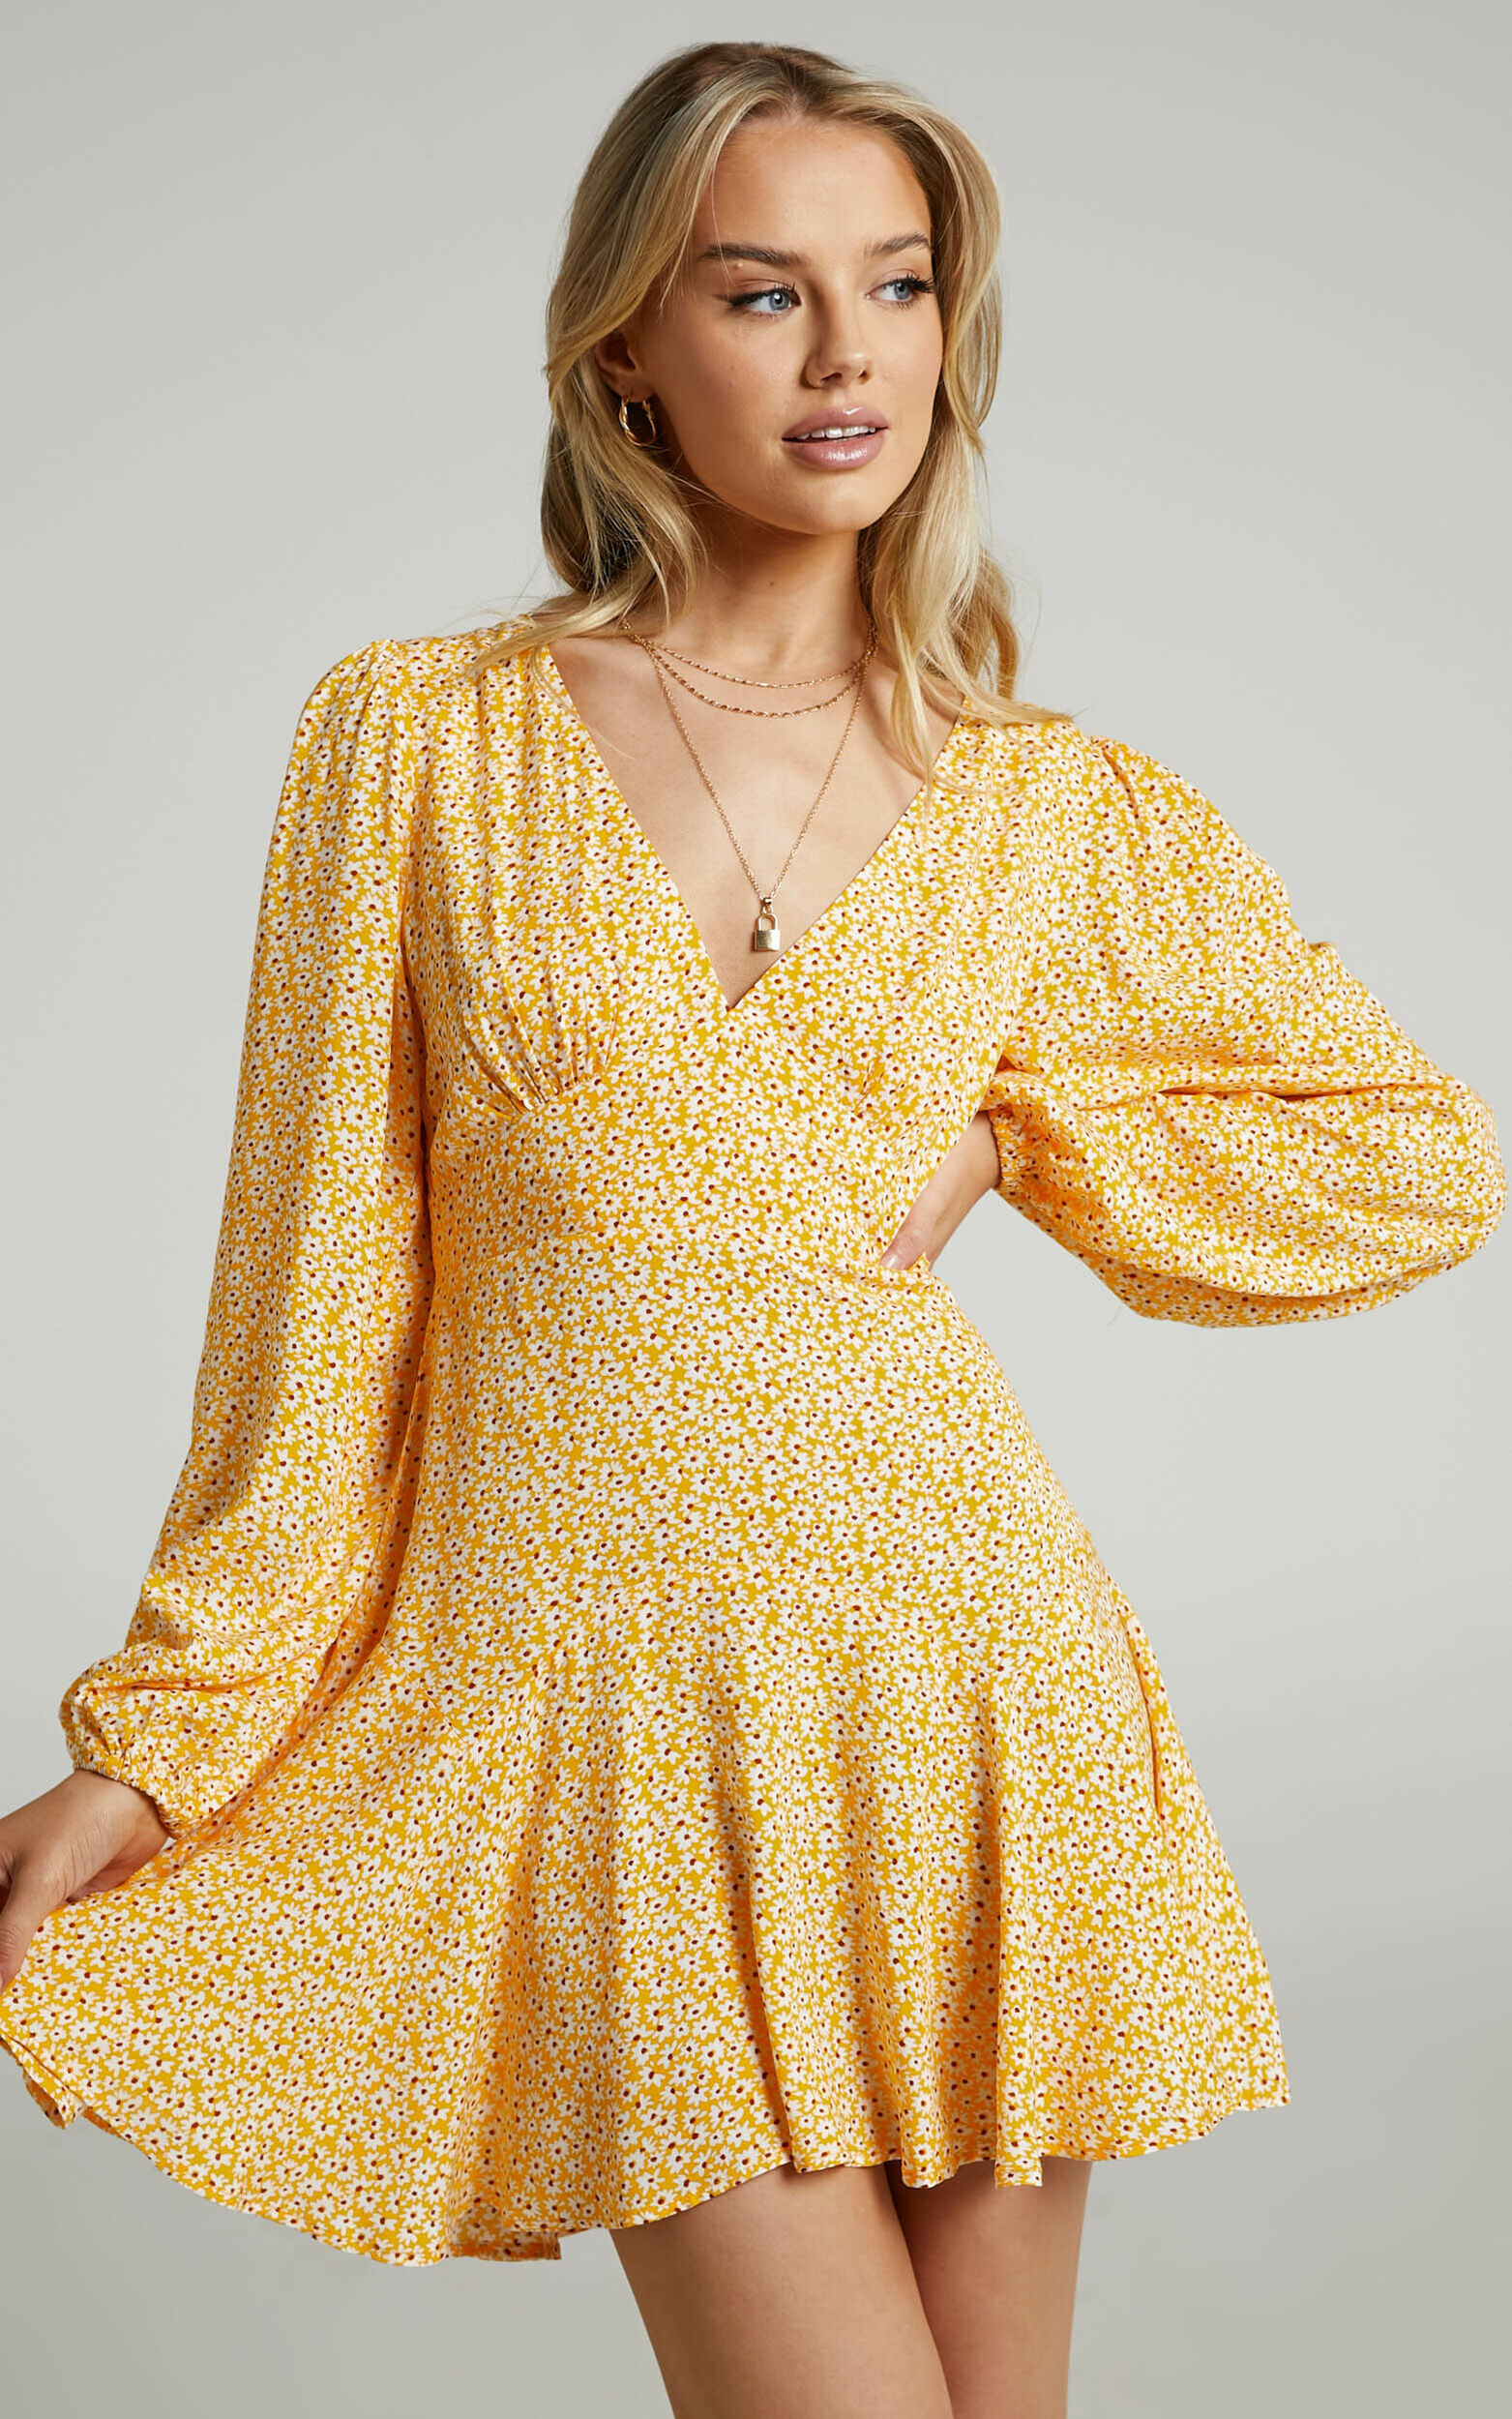 Riecha Mini Dress - Long Sleeve V Neck Dress in Yellow Floral - 04, YEL1